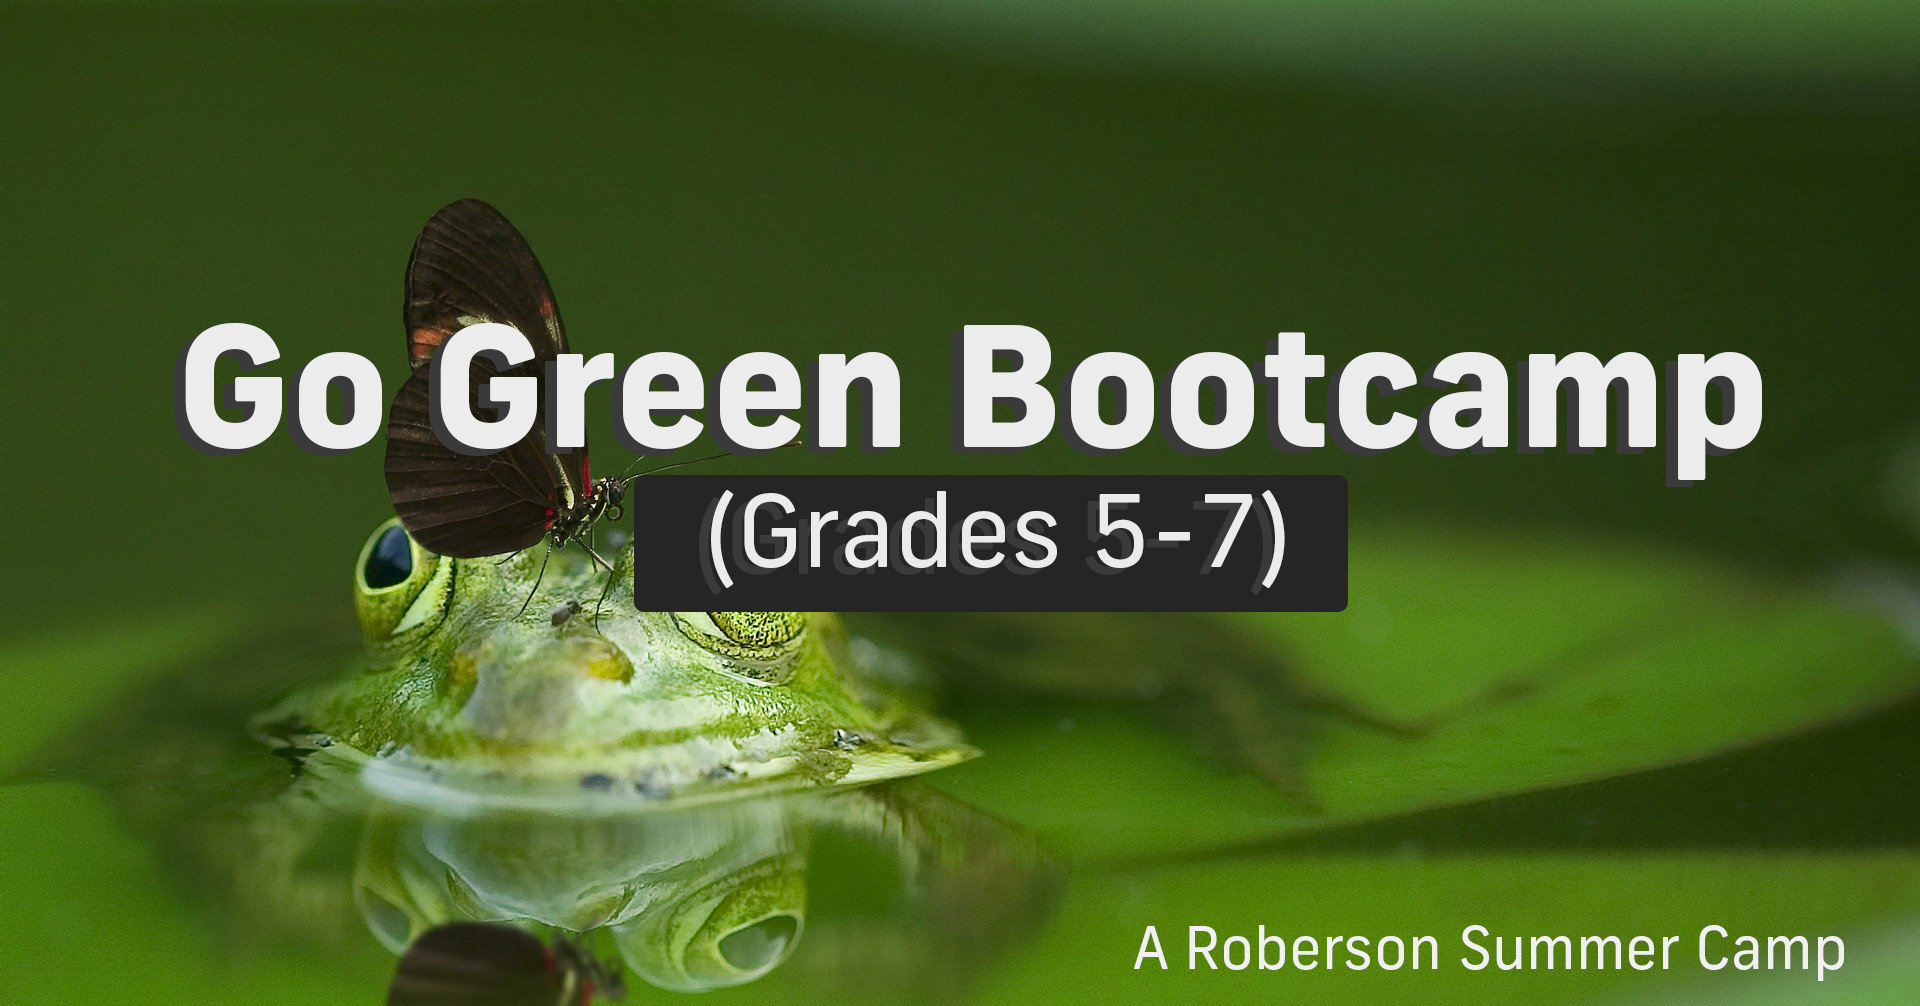 roberson summer camp - go green bootcamp